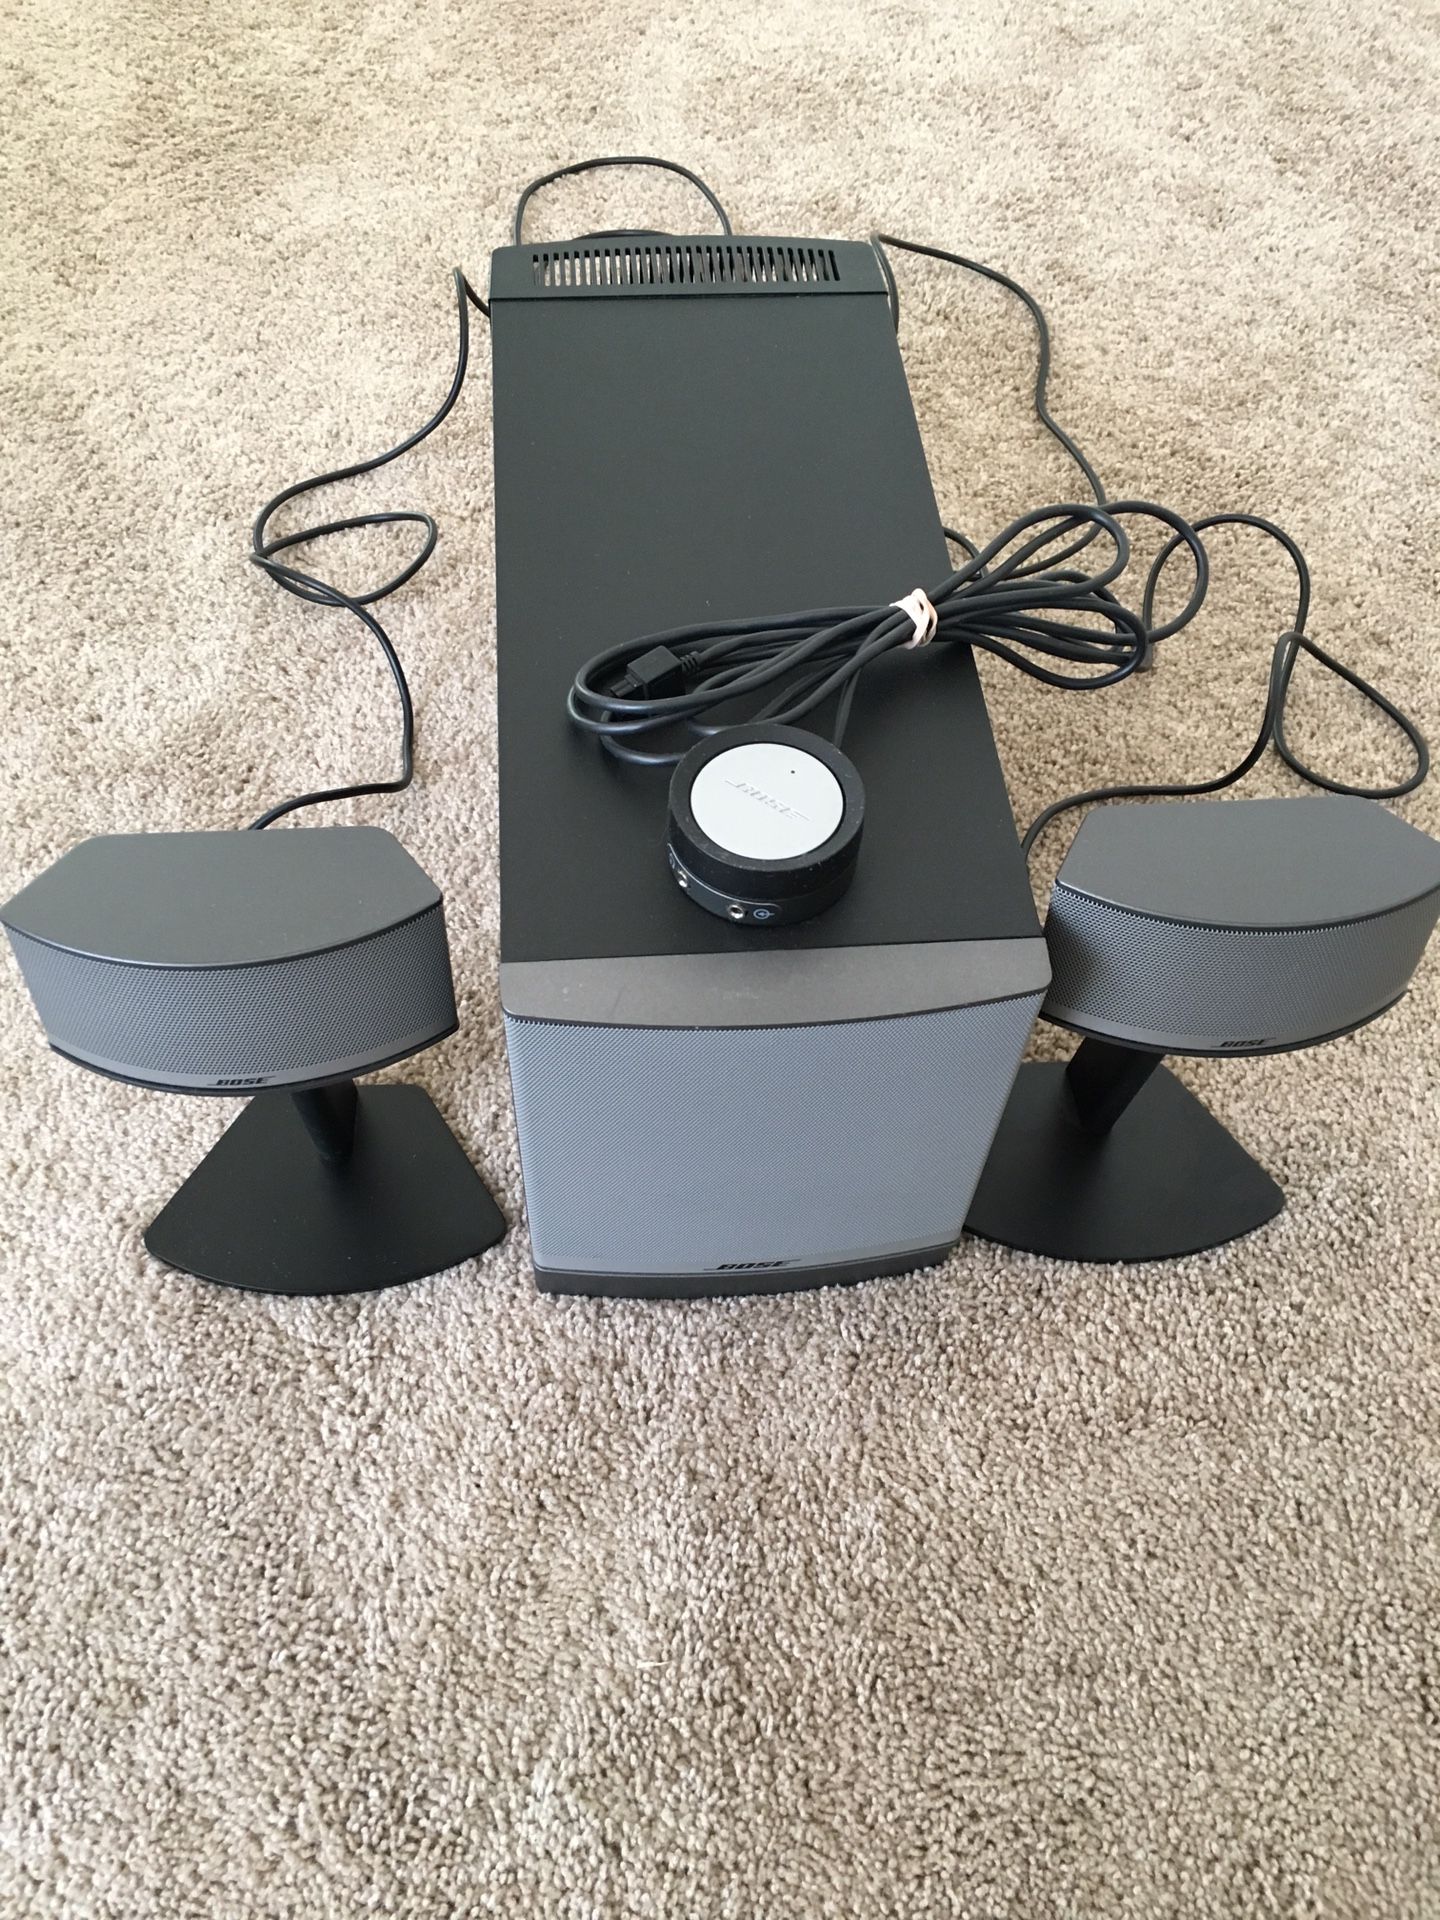 Bose Companion 5 Multimedia Speaker System